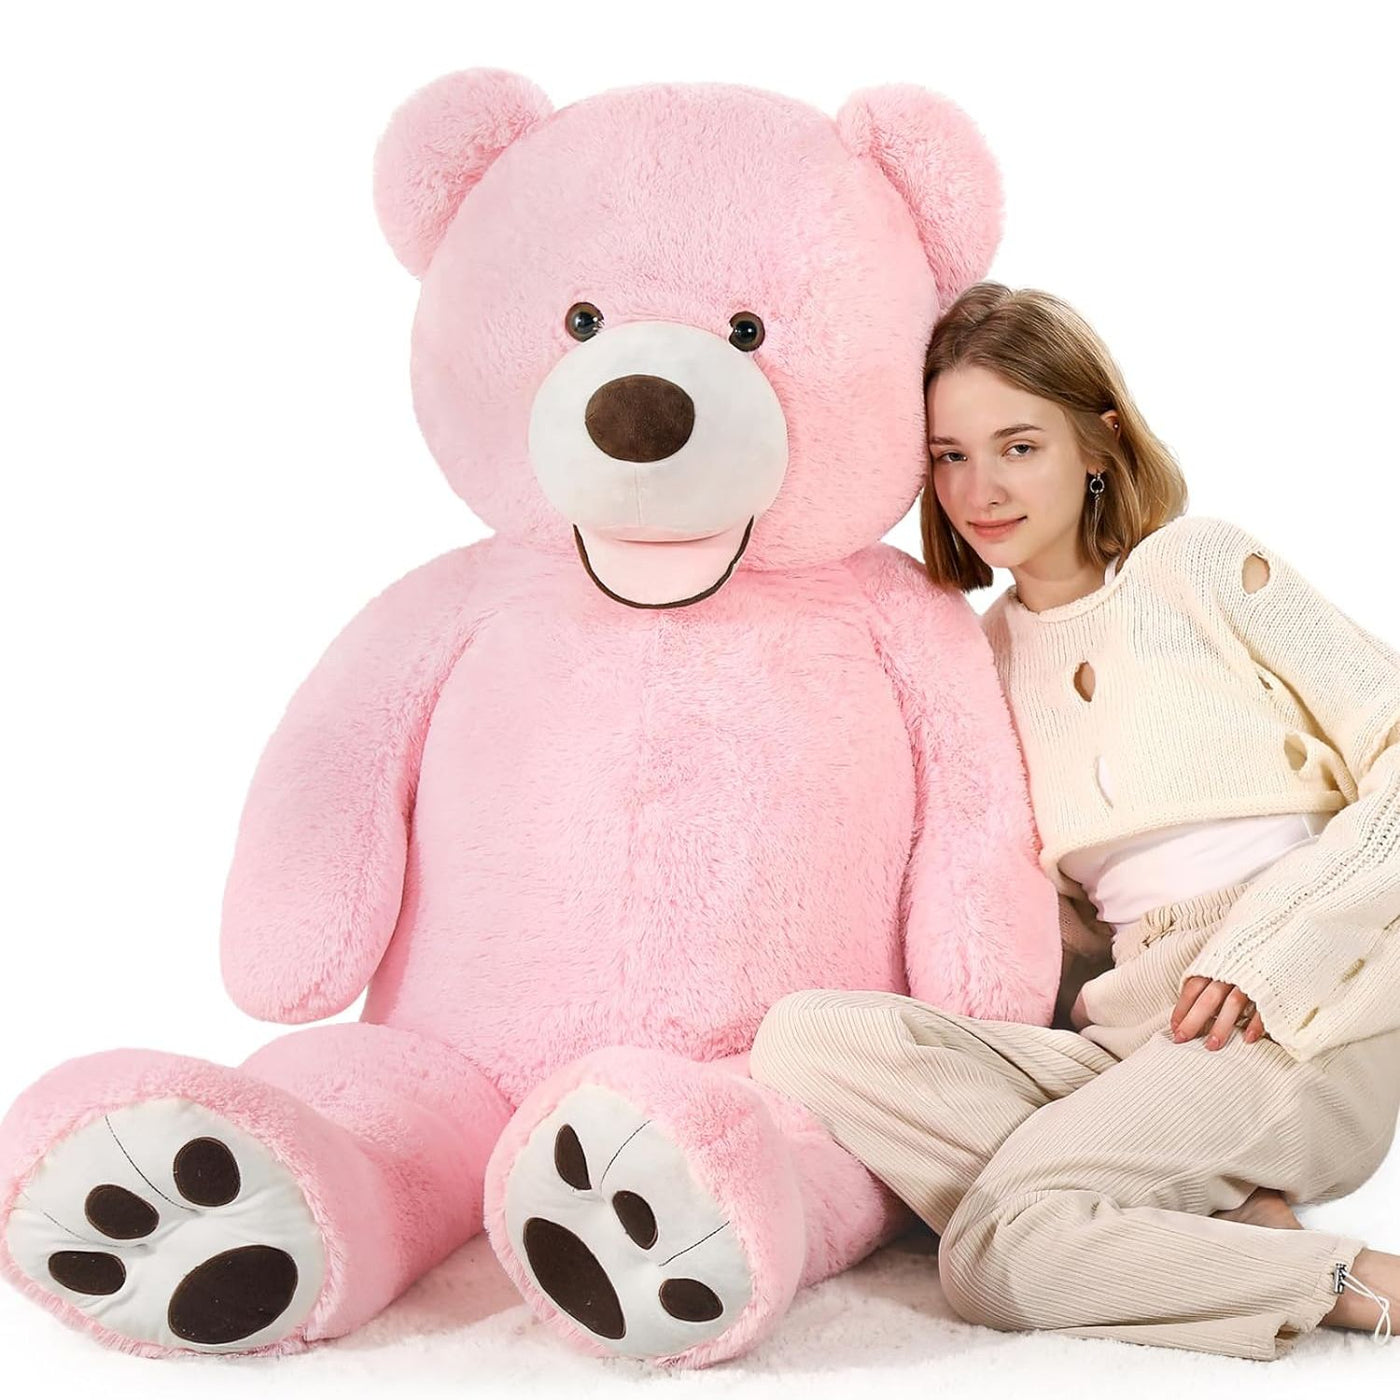 Giant Teddy Bear Stuffed Animal Toy, Pink, 59 Inches - MorisMos Plush Toys